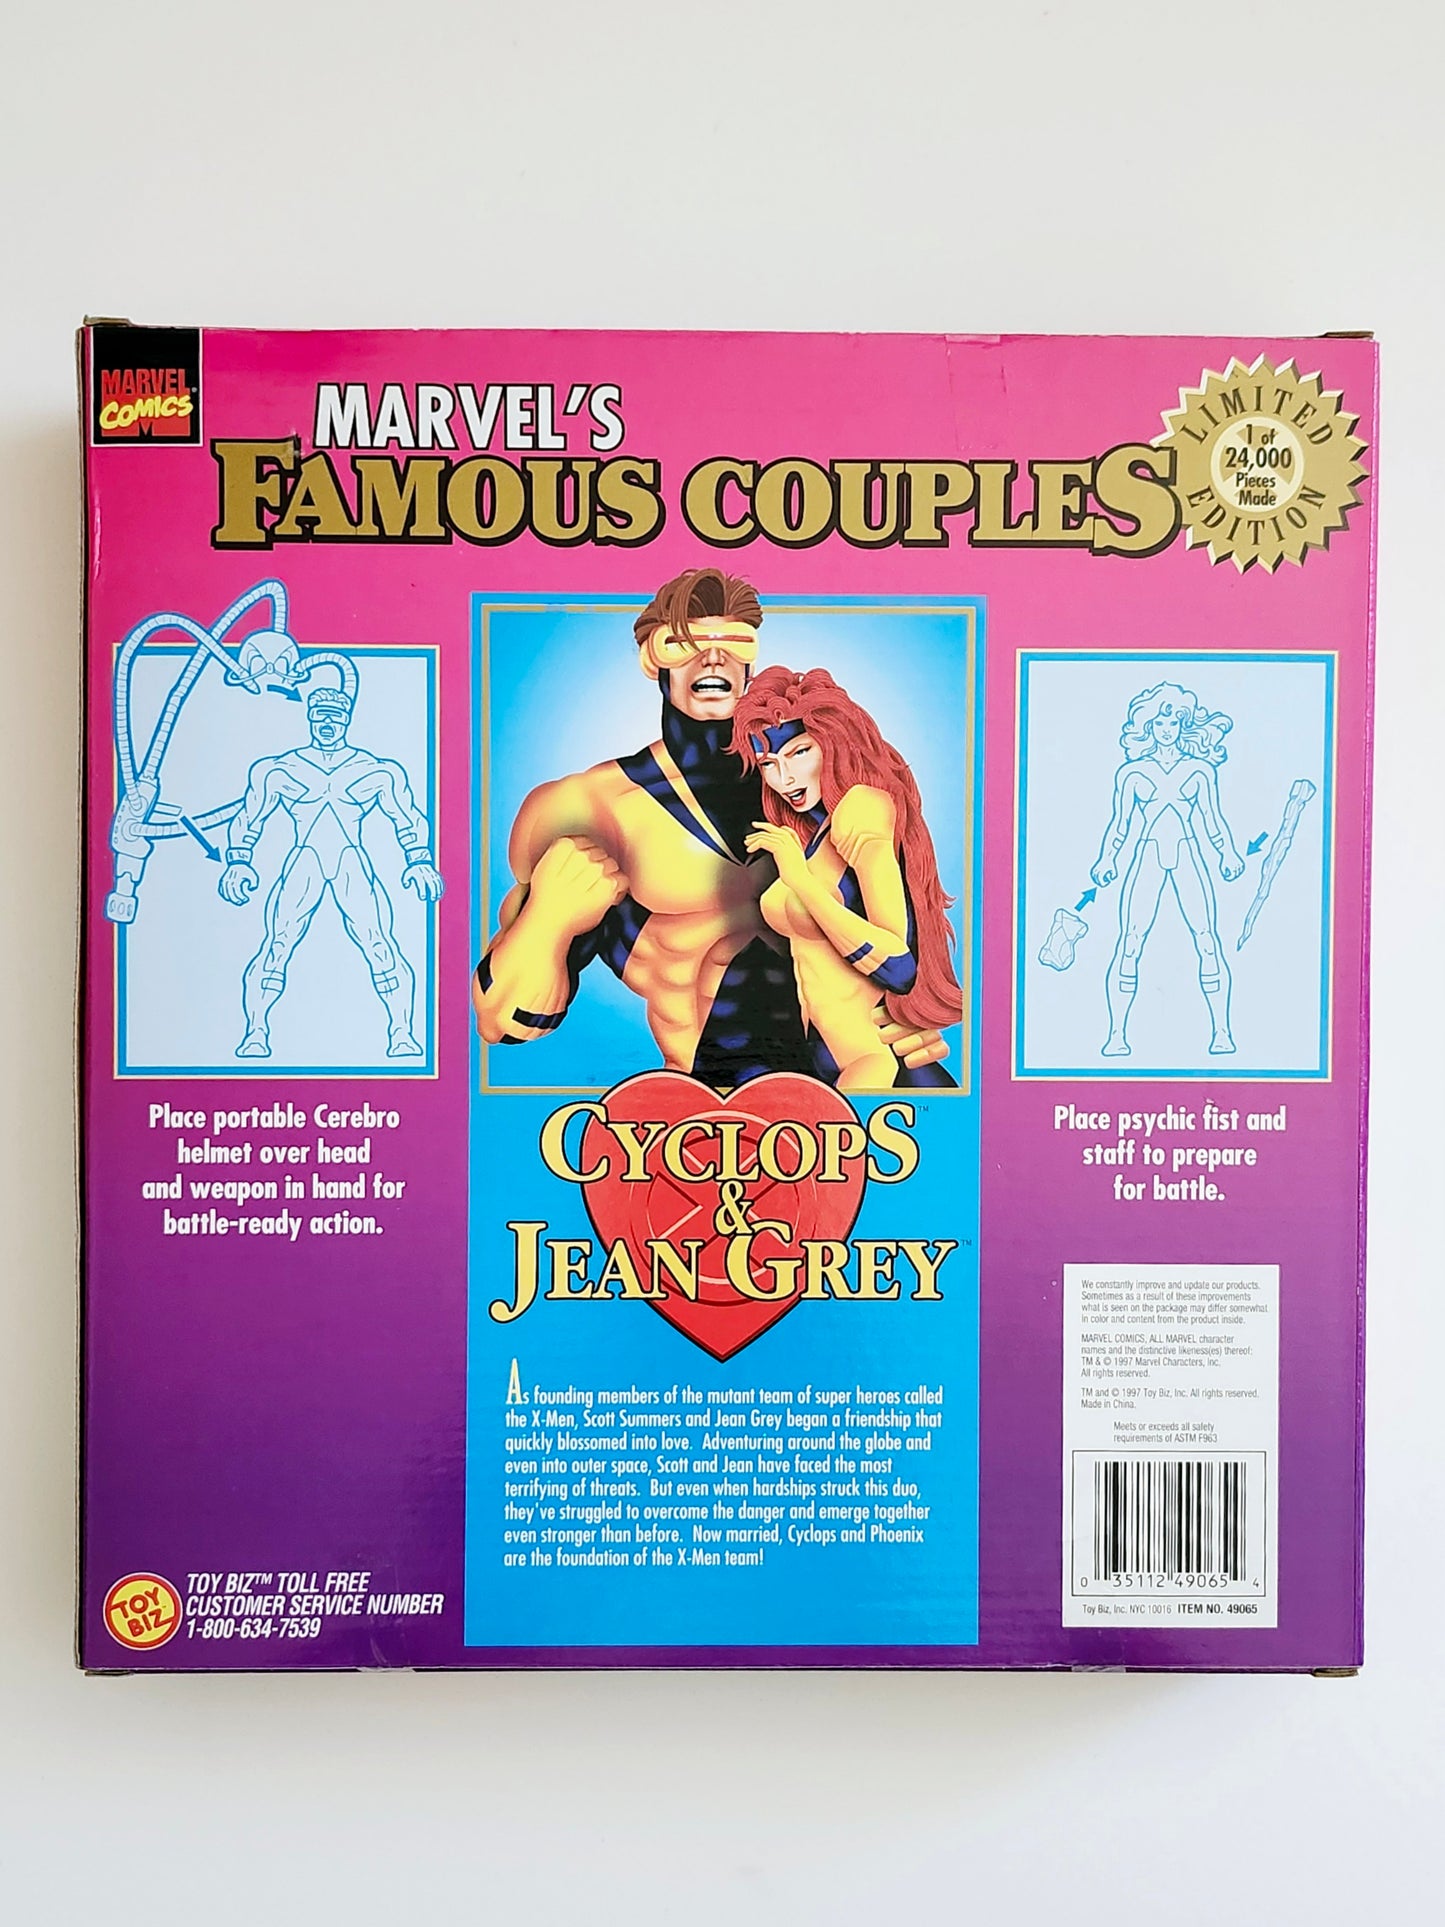 Marvel's Famous Couples Cyclops & Jean Grey Action Figures